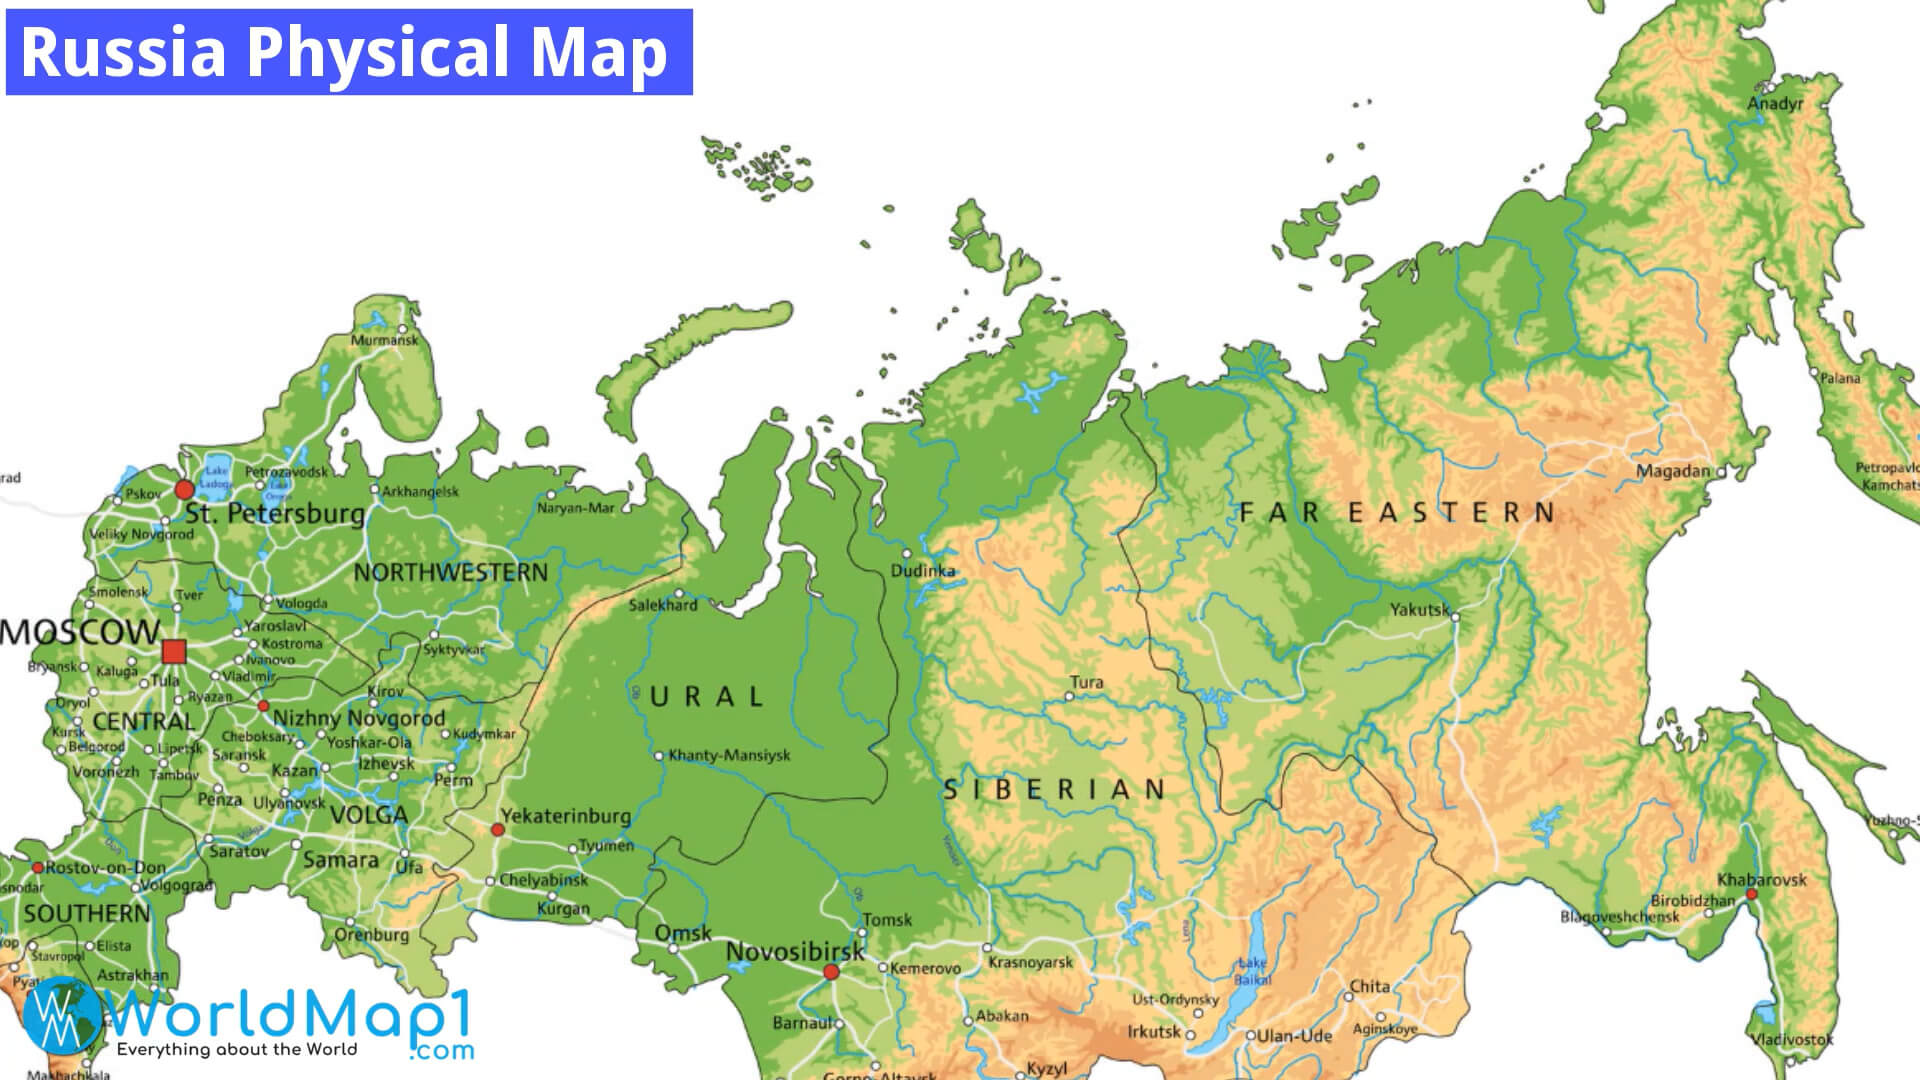 Russia Pyhsical Map